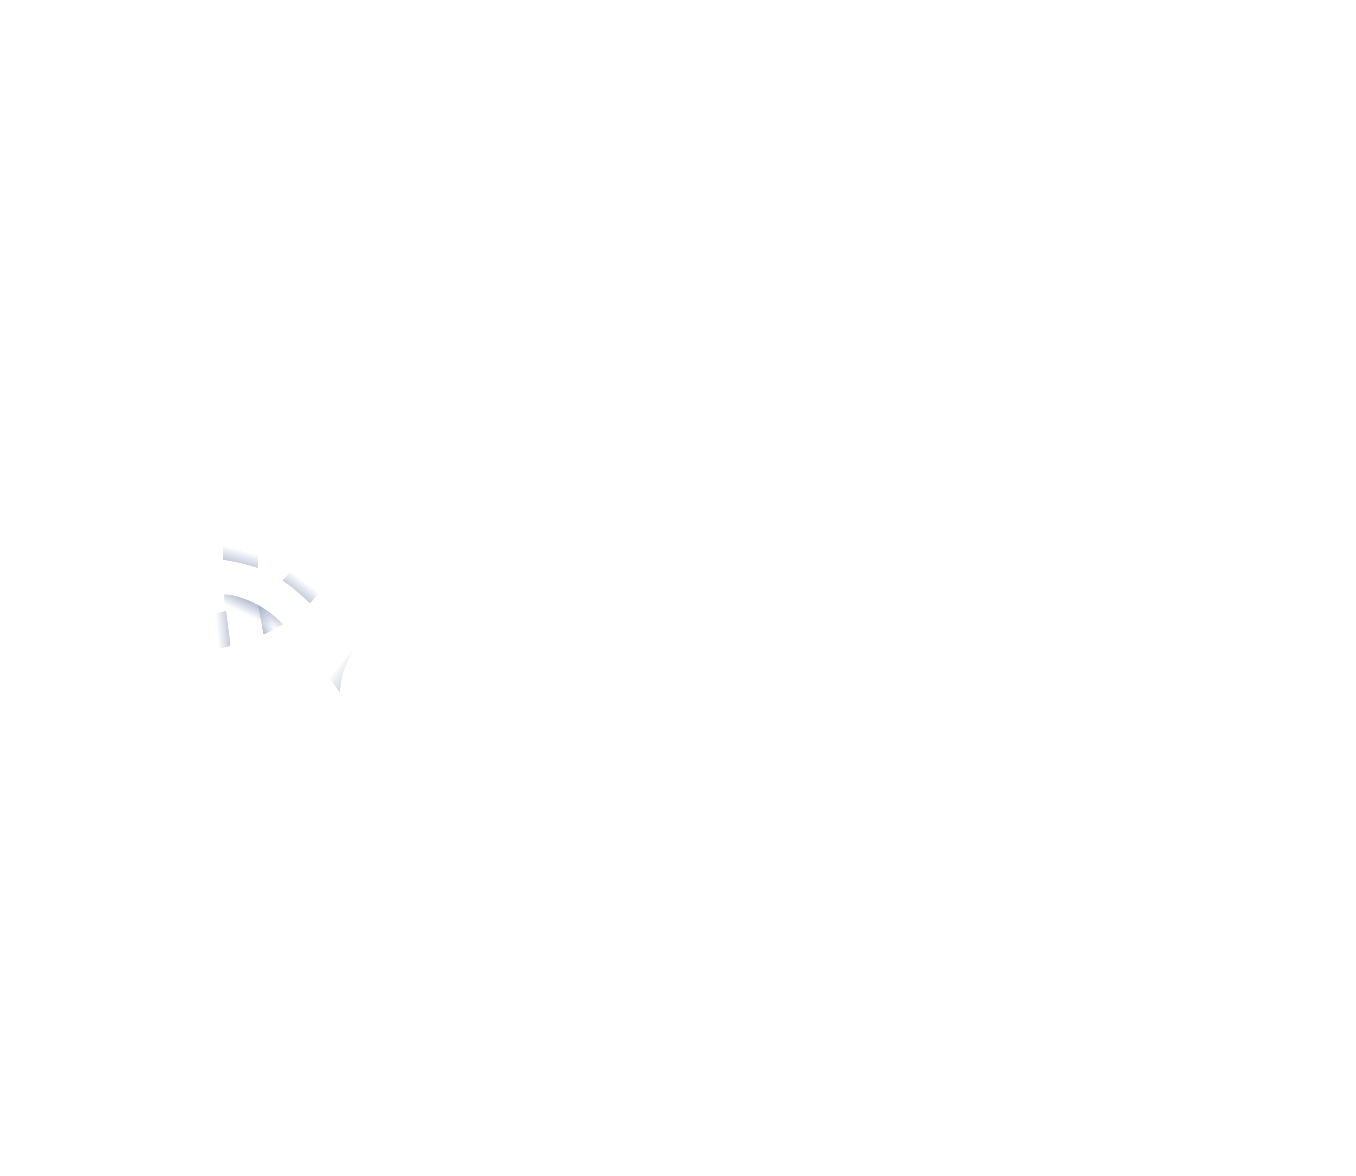 Restworld